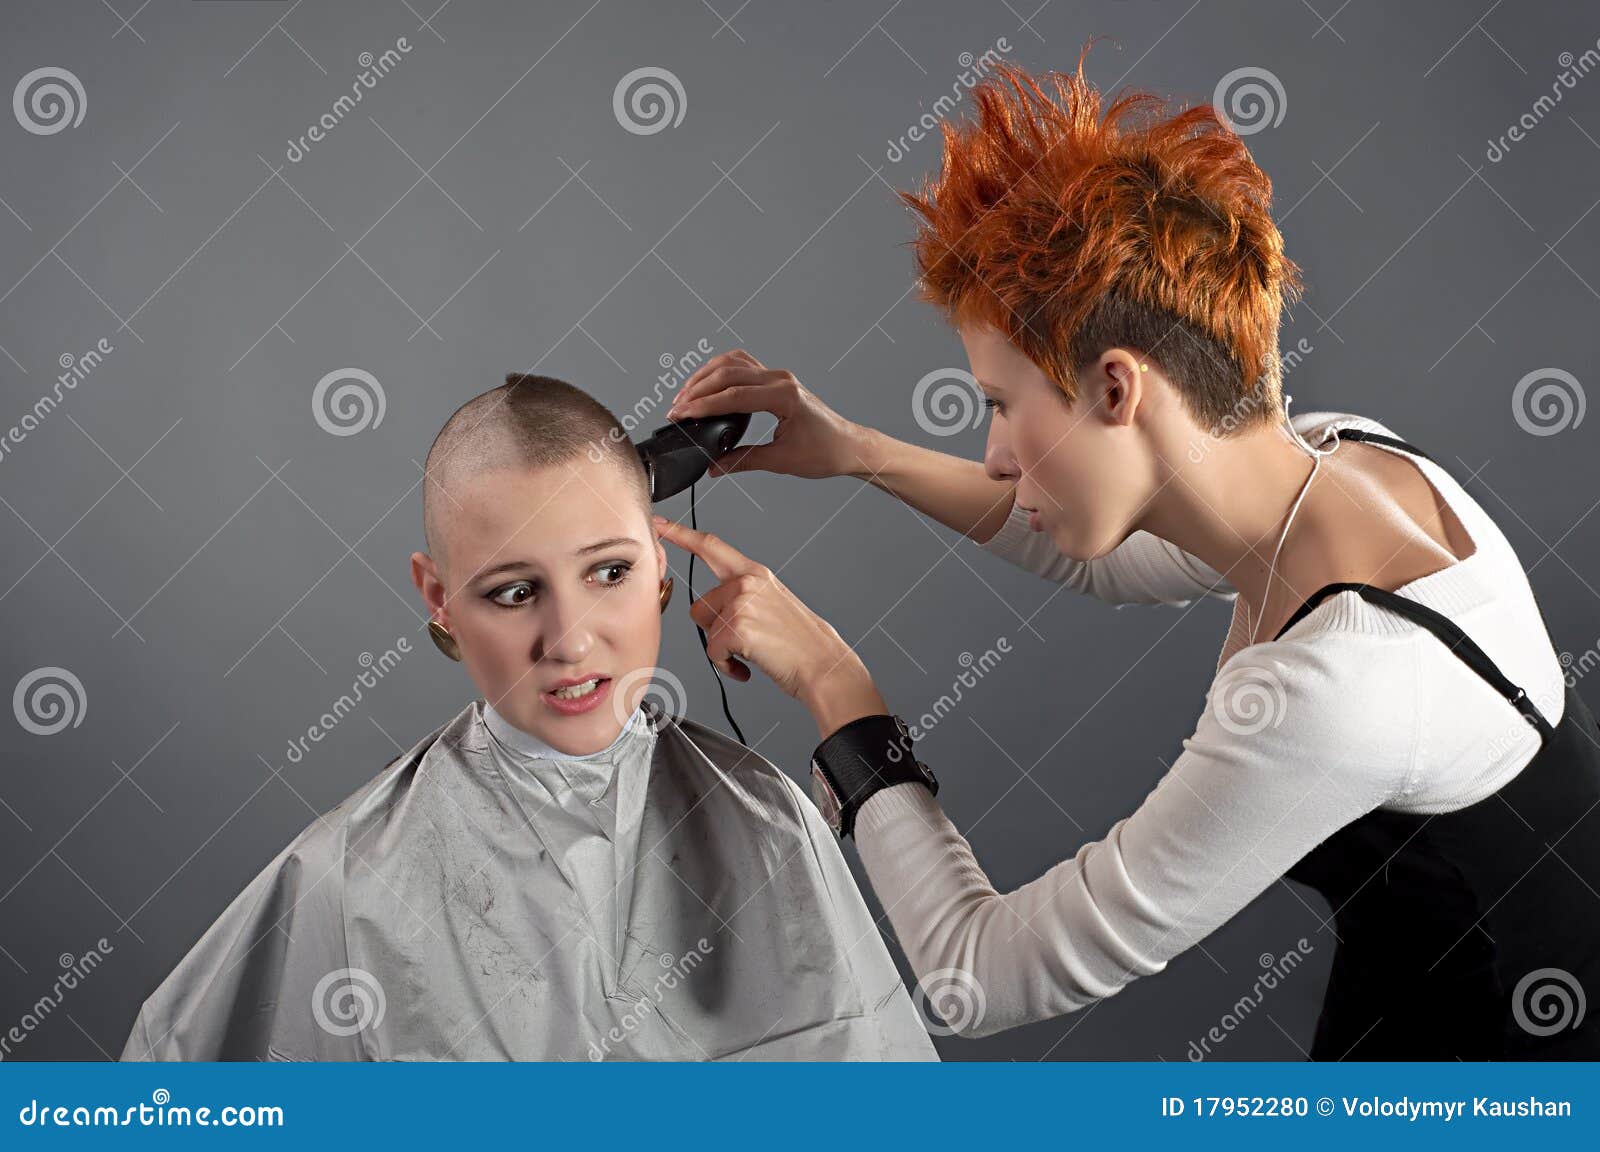 Radical haircut stock photo. Image of razor, fashion 